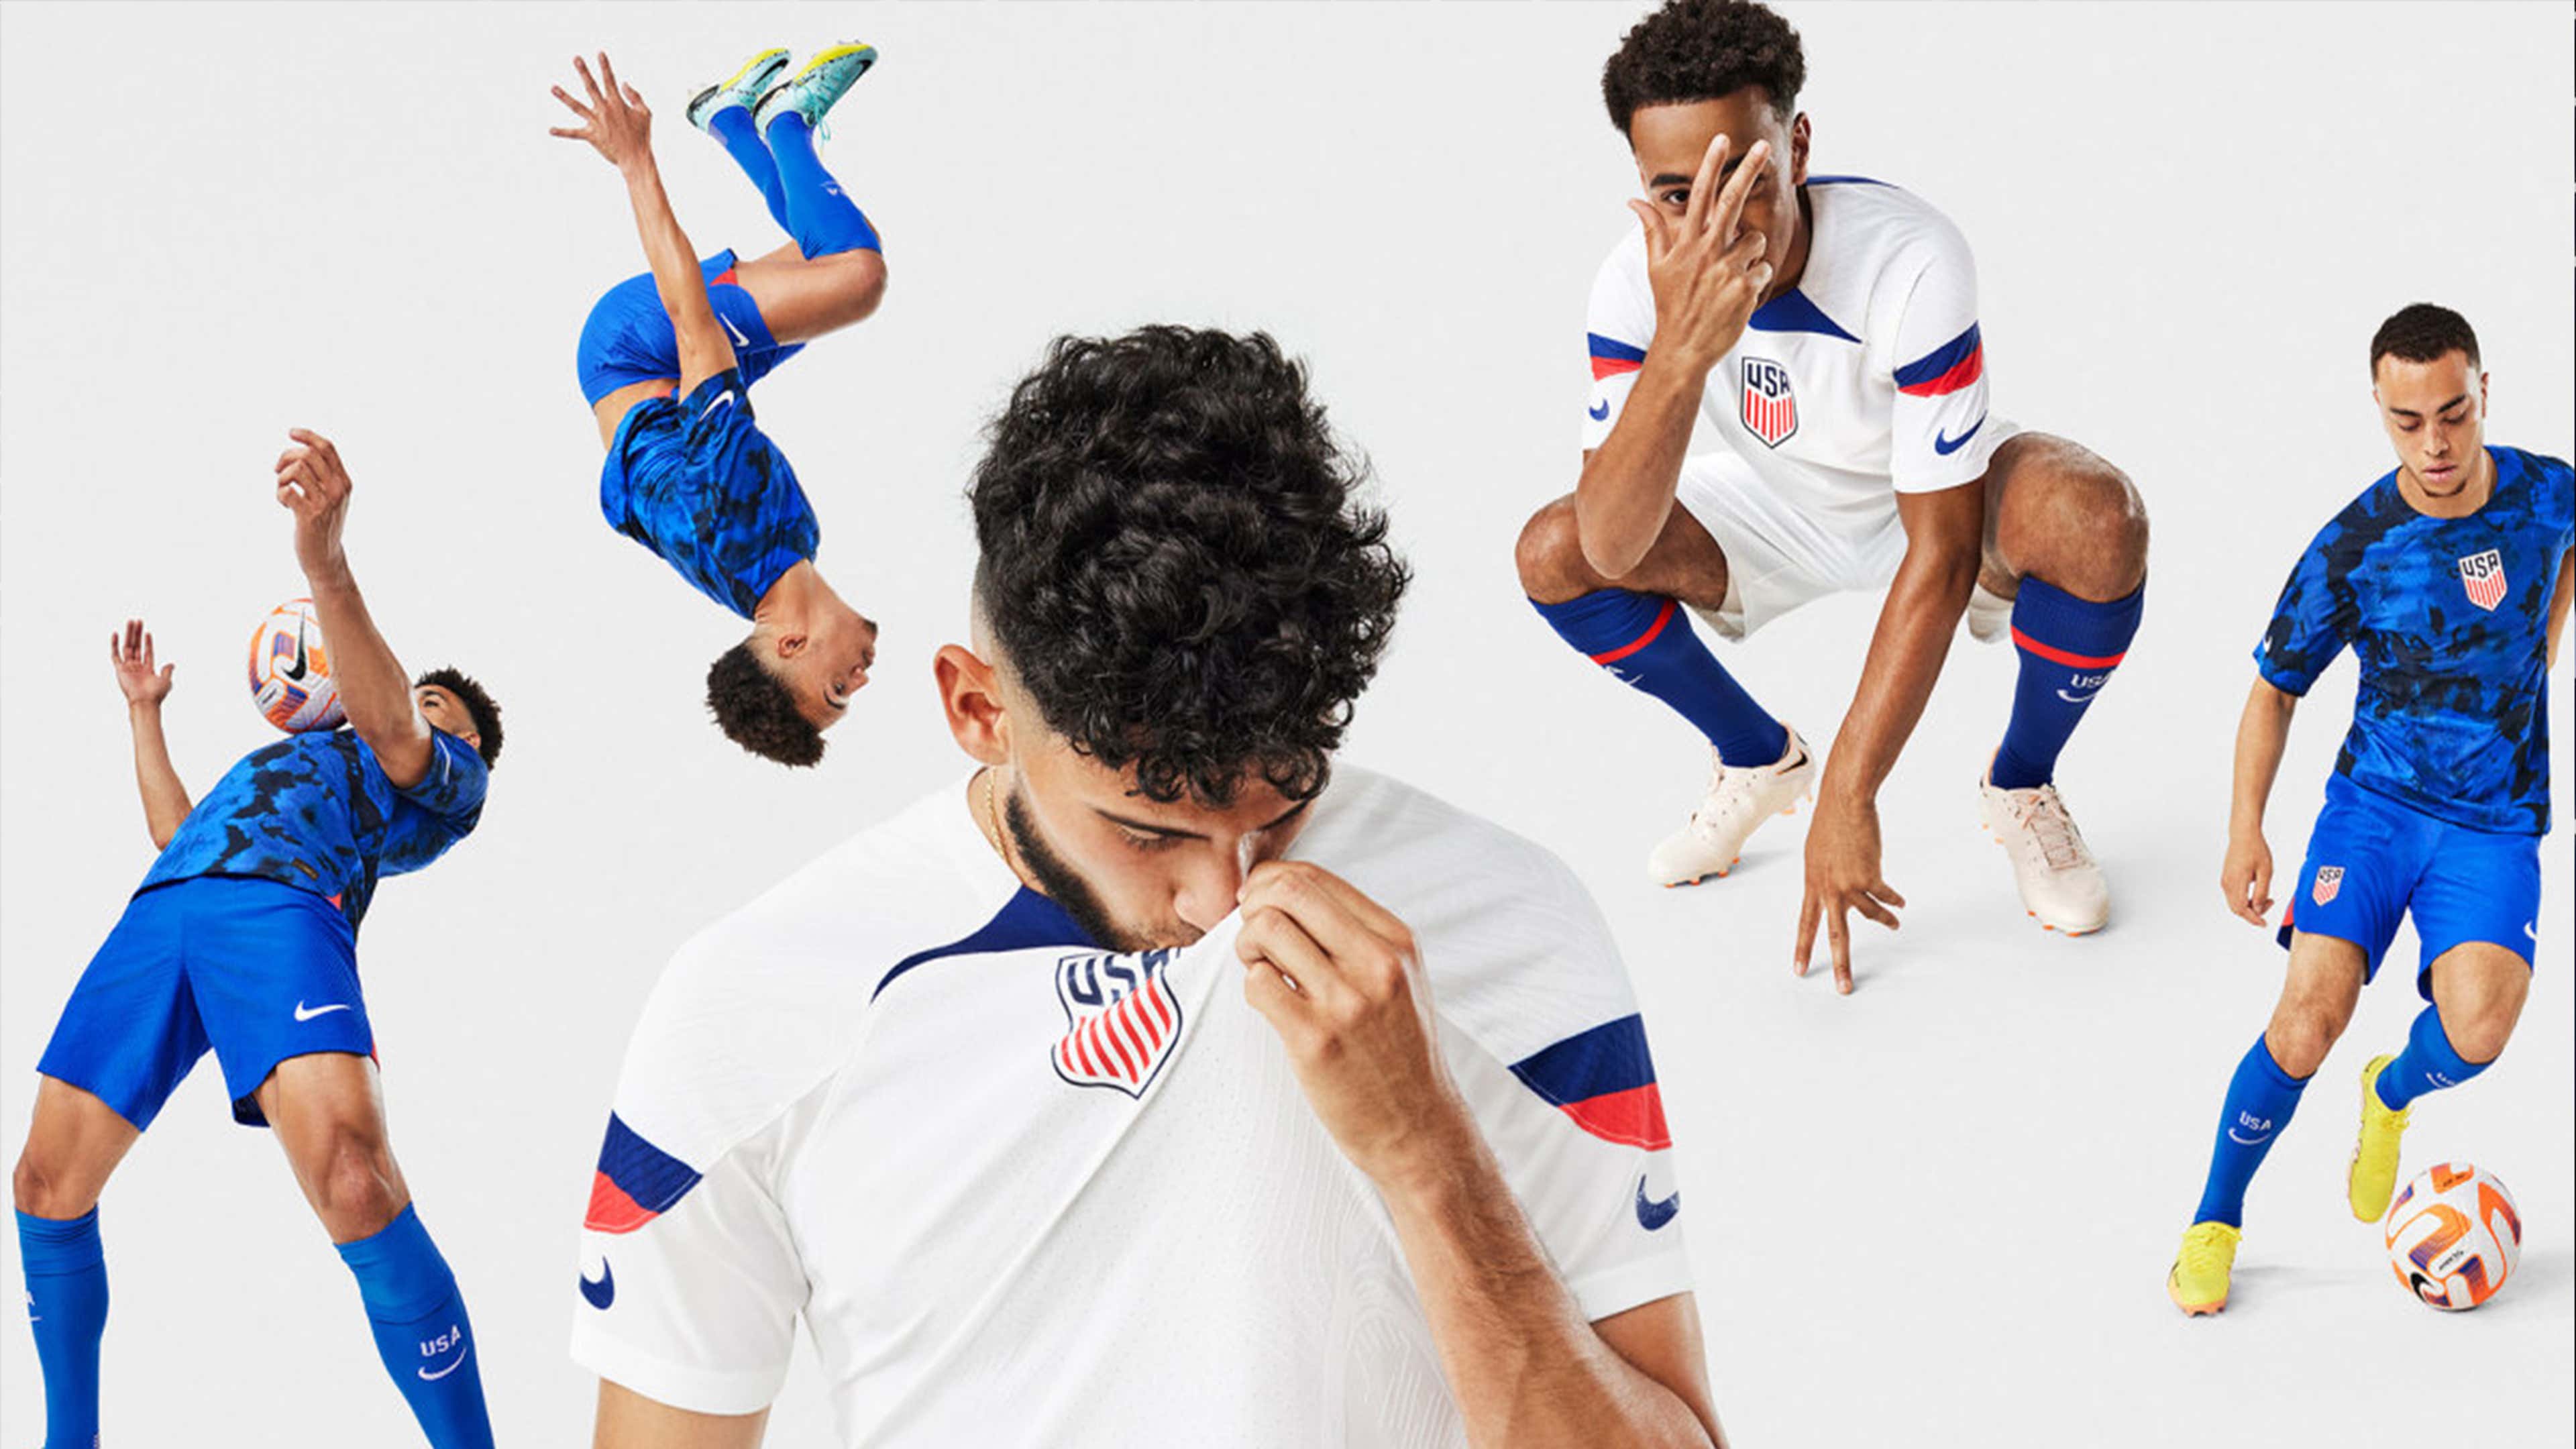 USA 2022 World Cup Home & Away Kits Released - Footy Headlines